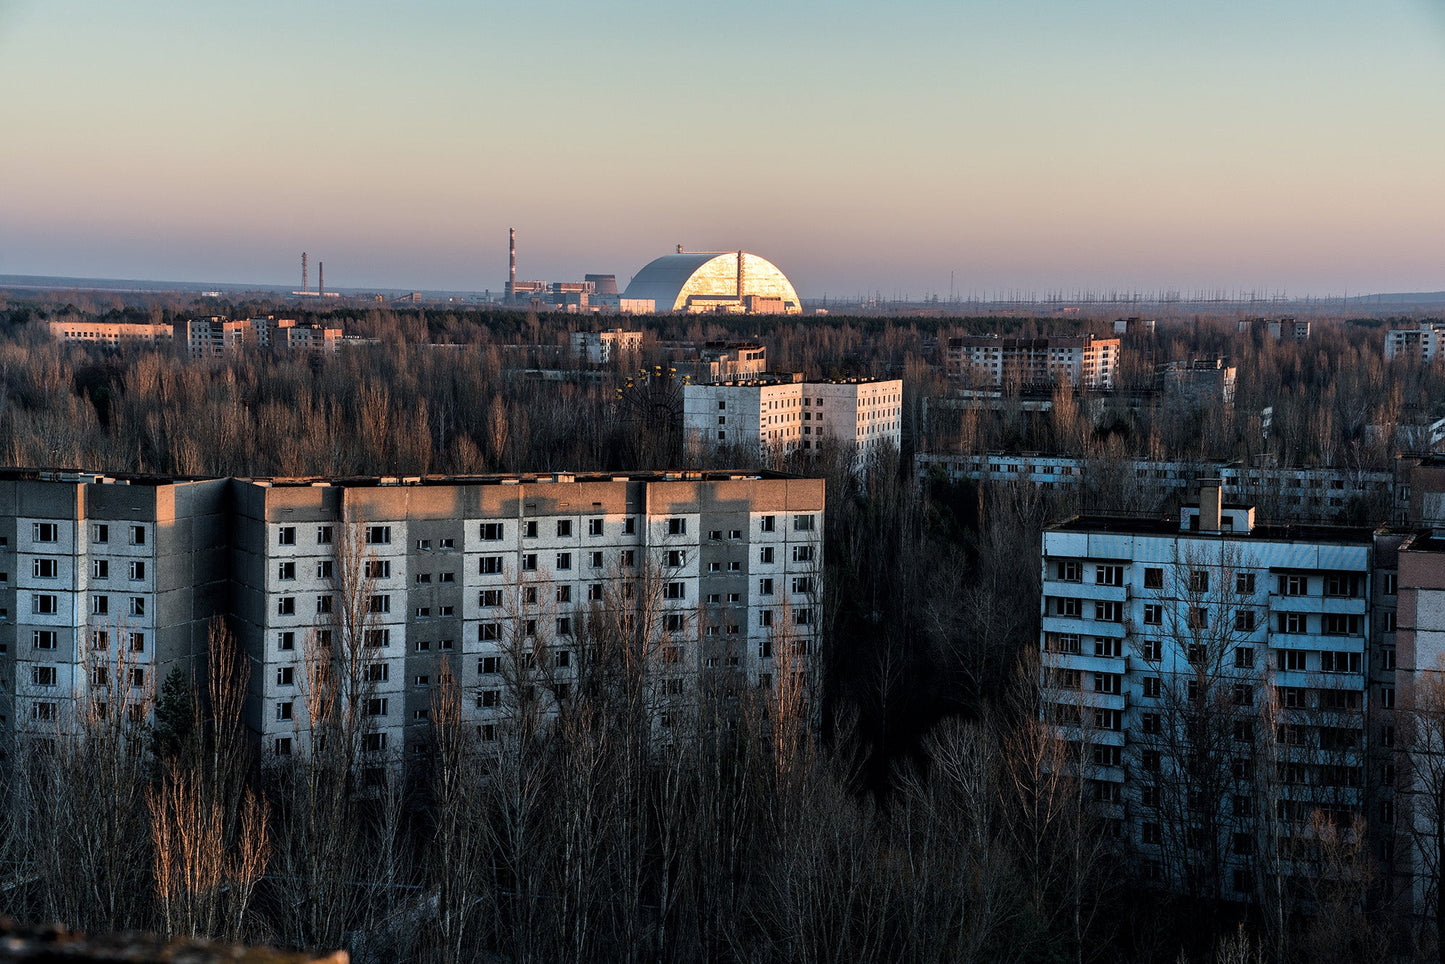 Chernobyl - Signed